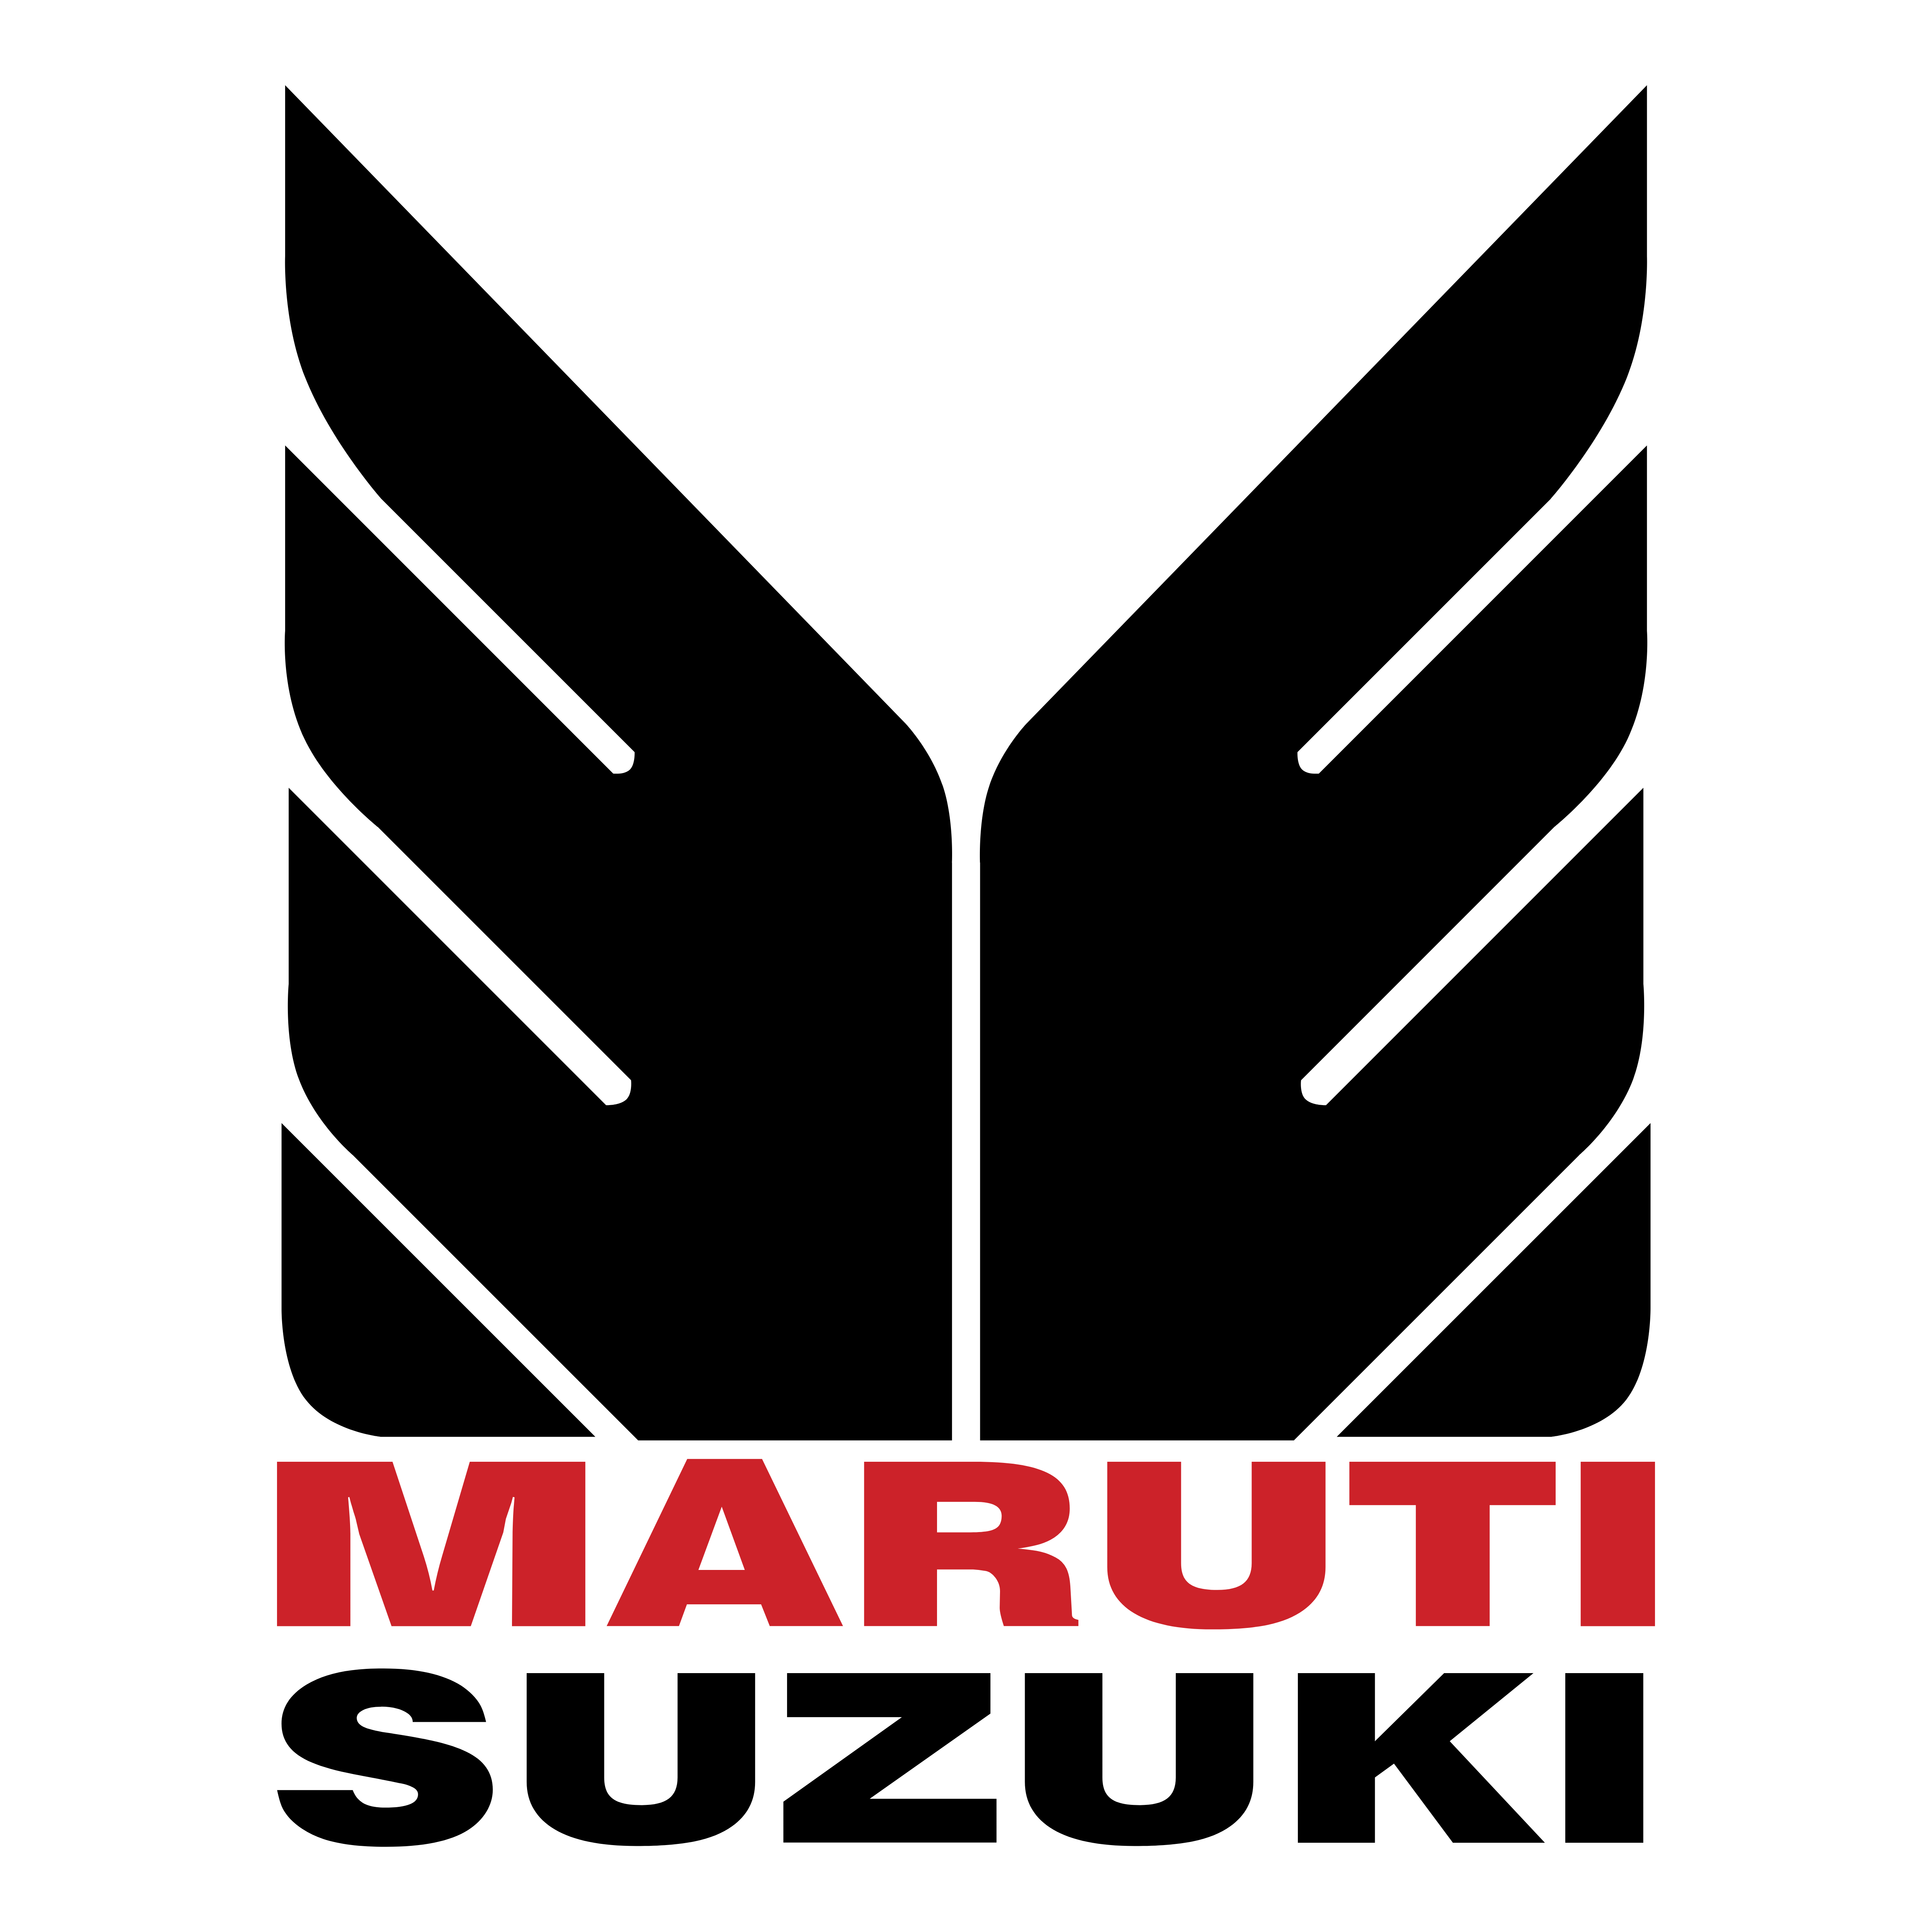 Suzuki – Logos Download